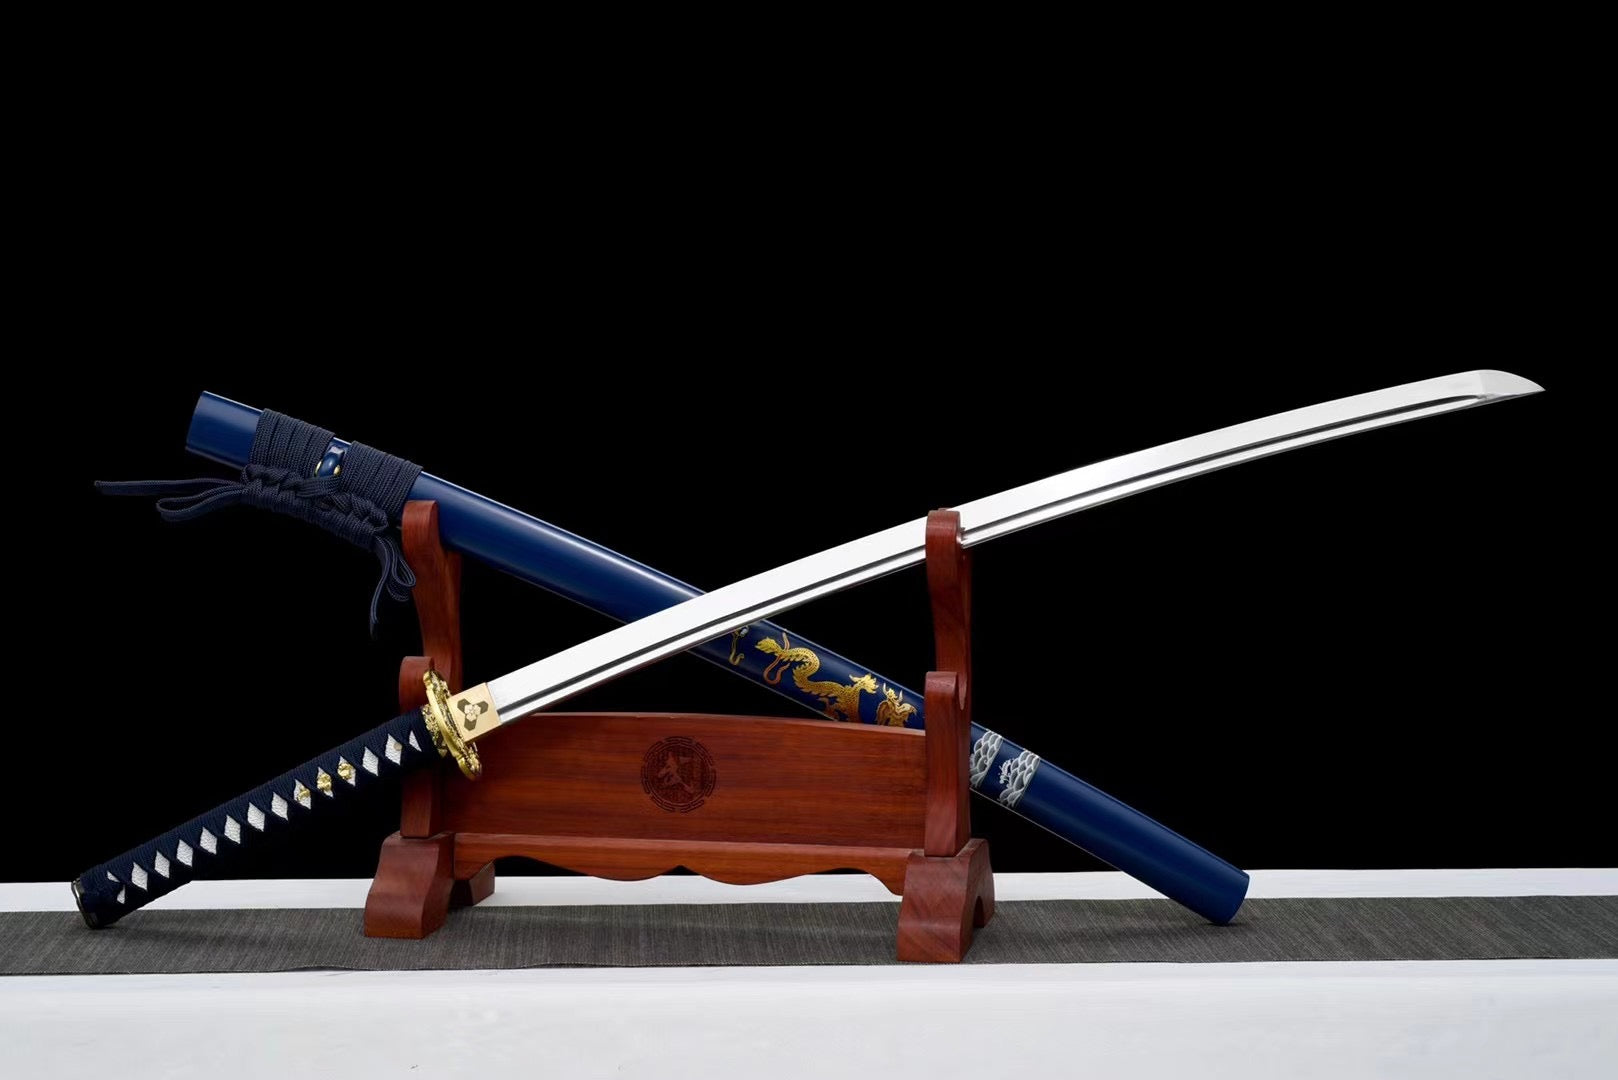 Water Dragon Katana Set, Katana and Tanto Sword,Japanese Samurai Sword,Real Katana,Handmade sword, High manganese steel